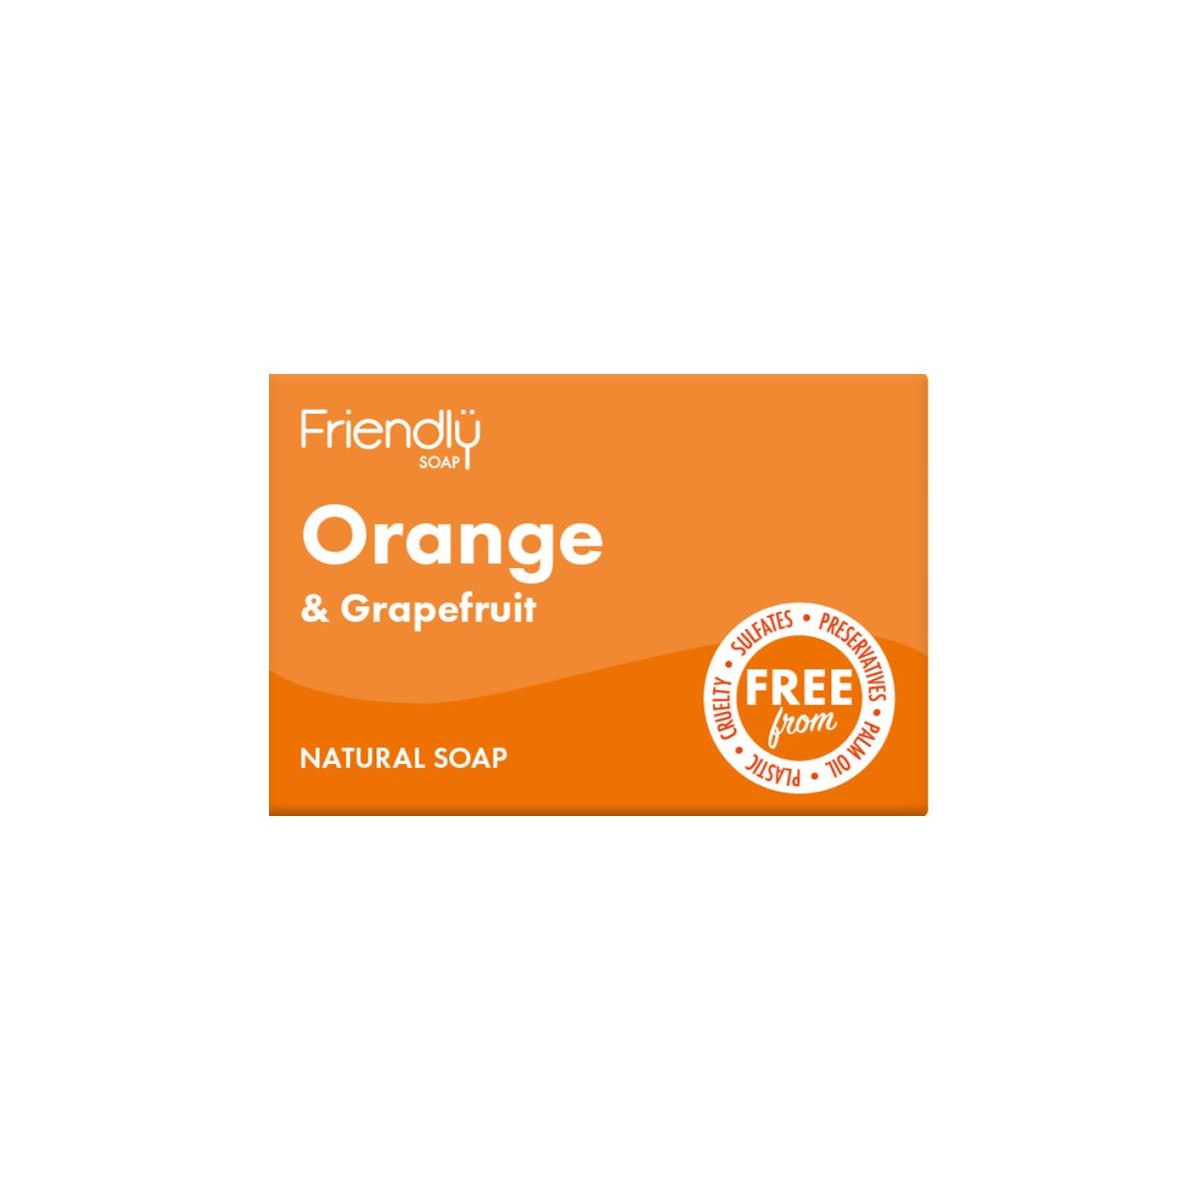 Friendly Soap Orange and Grapefruit - Natural Soap 95g